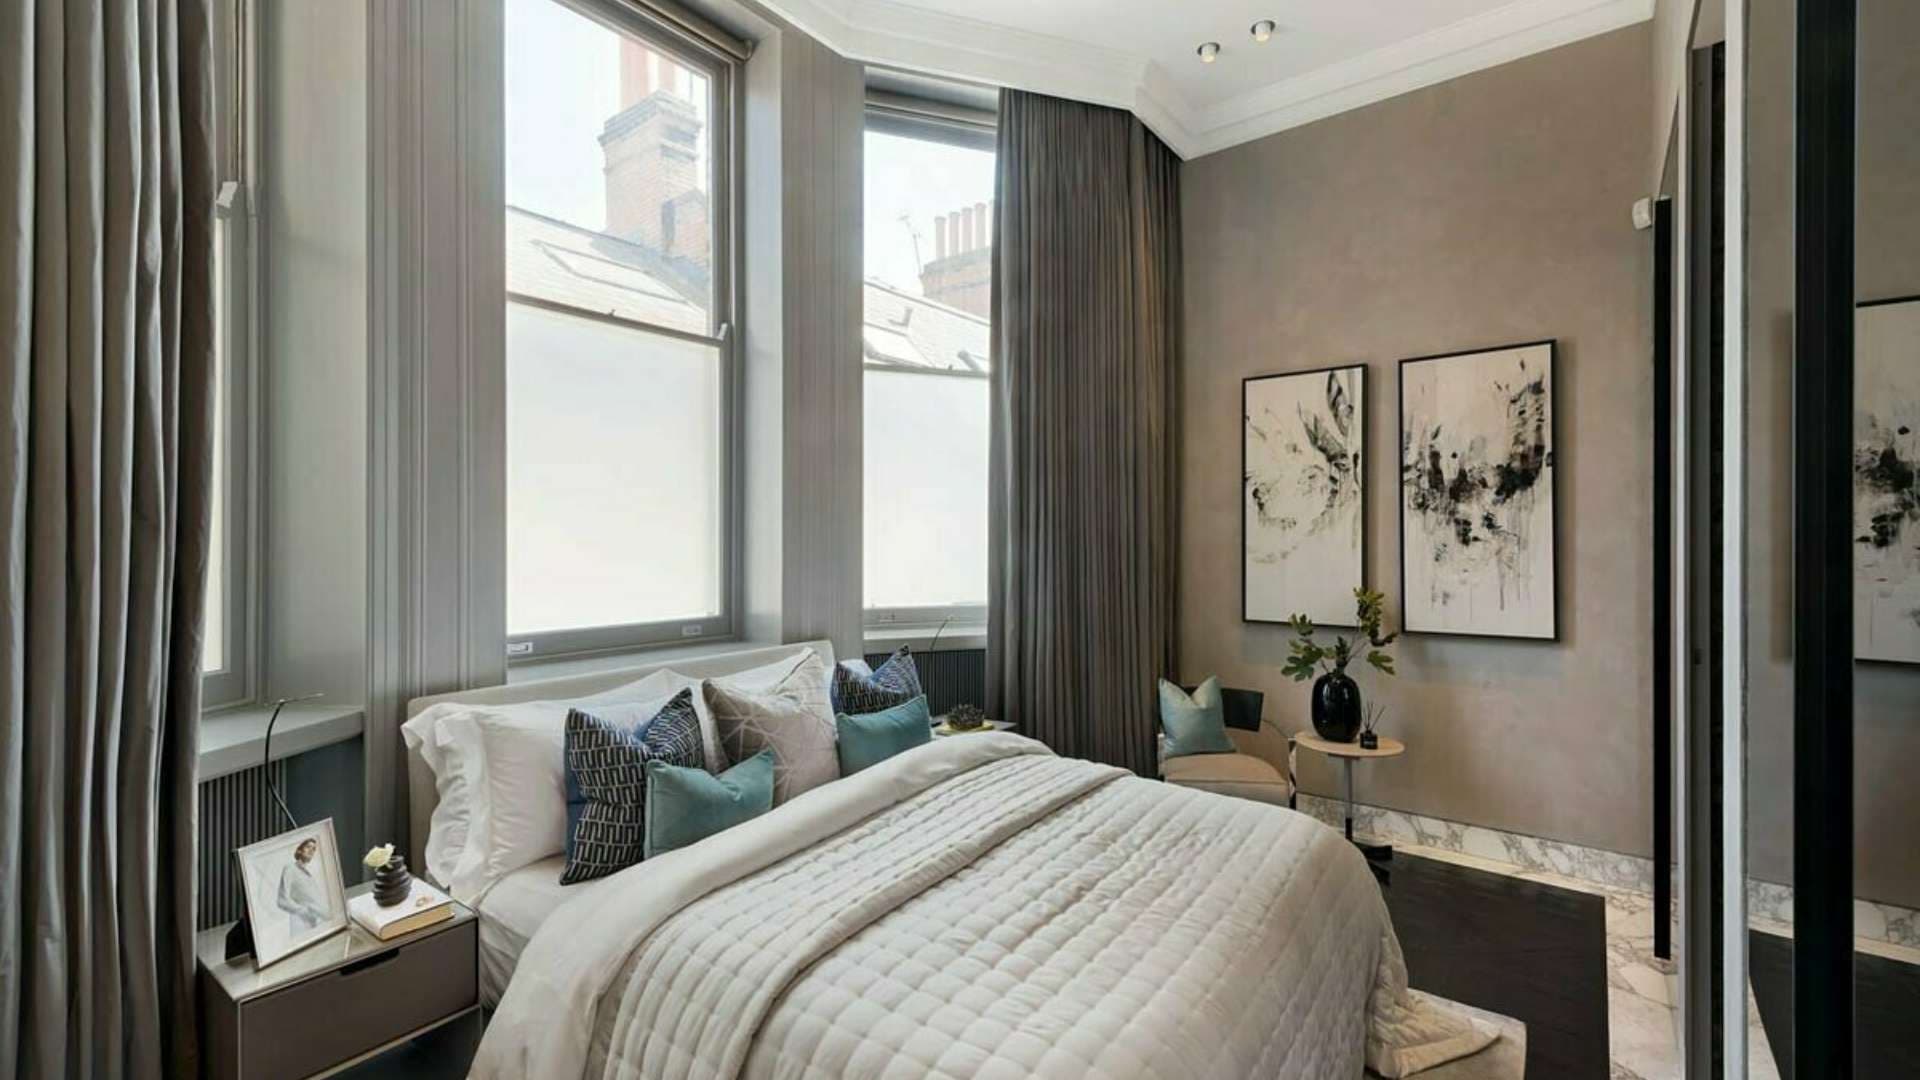 5 Bedroom Apartment For Sale Cadogan Square London Lp10416 57508eb69c34900.jpg